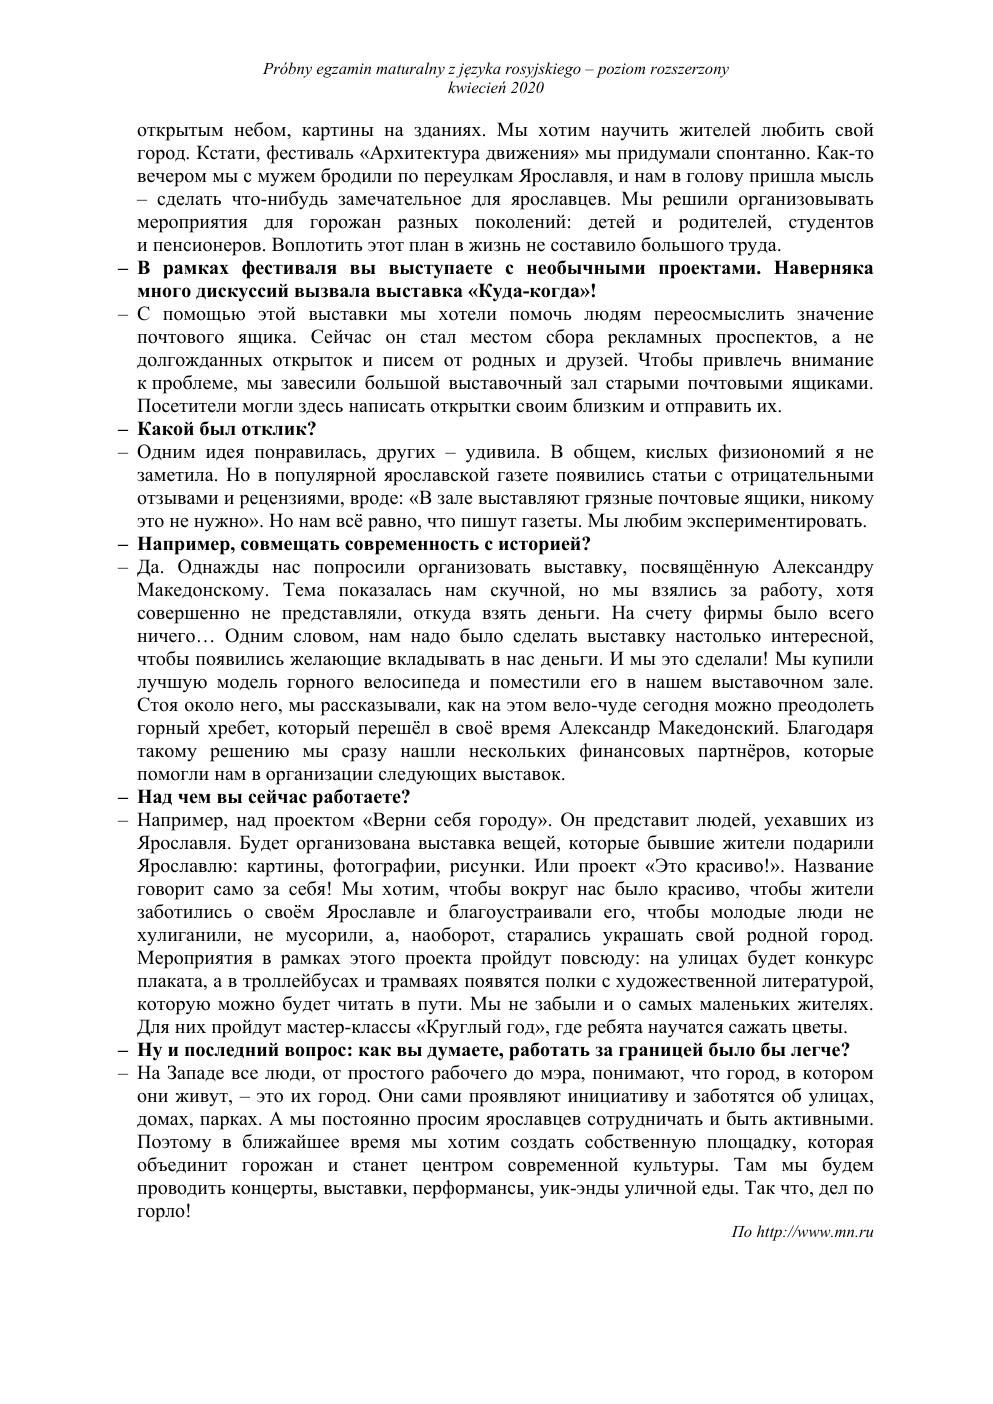 transkrypcja - rosyjski rozszerzony - matura 2020 próbna-3